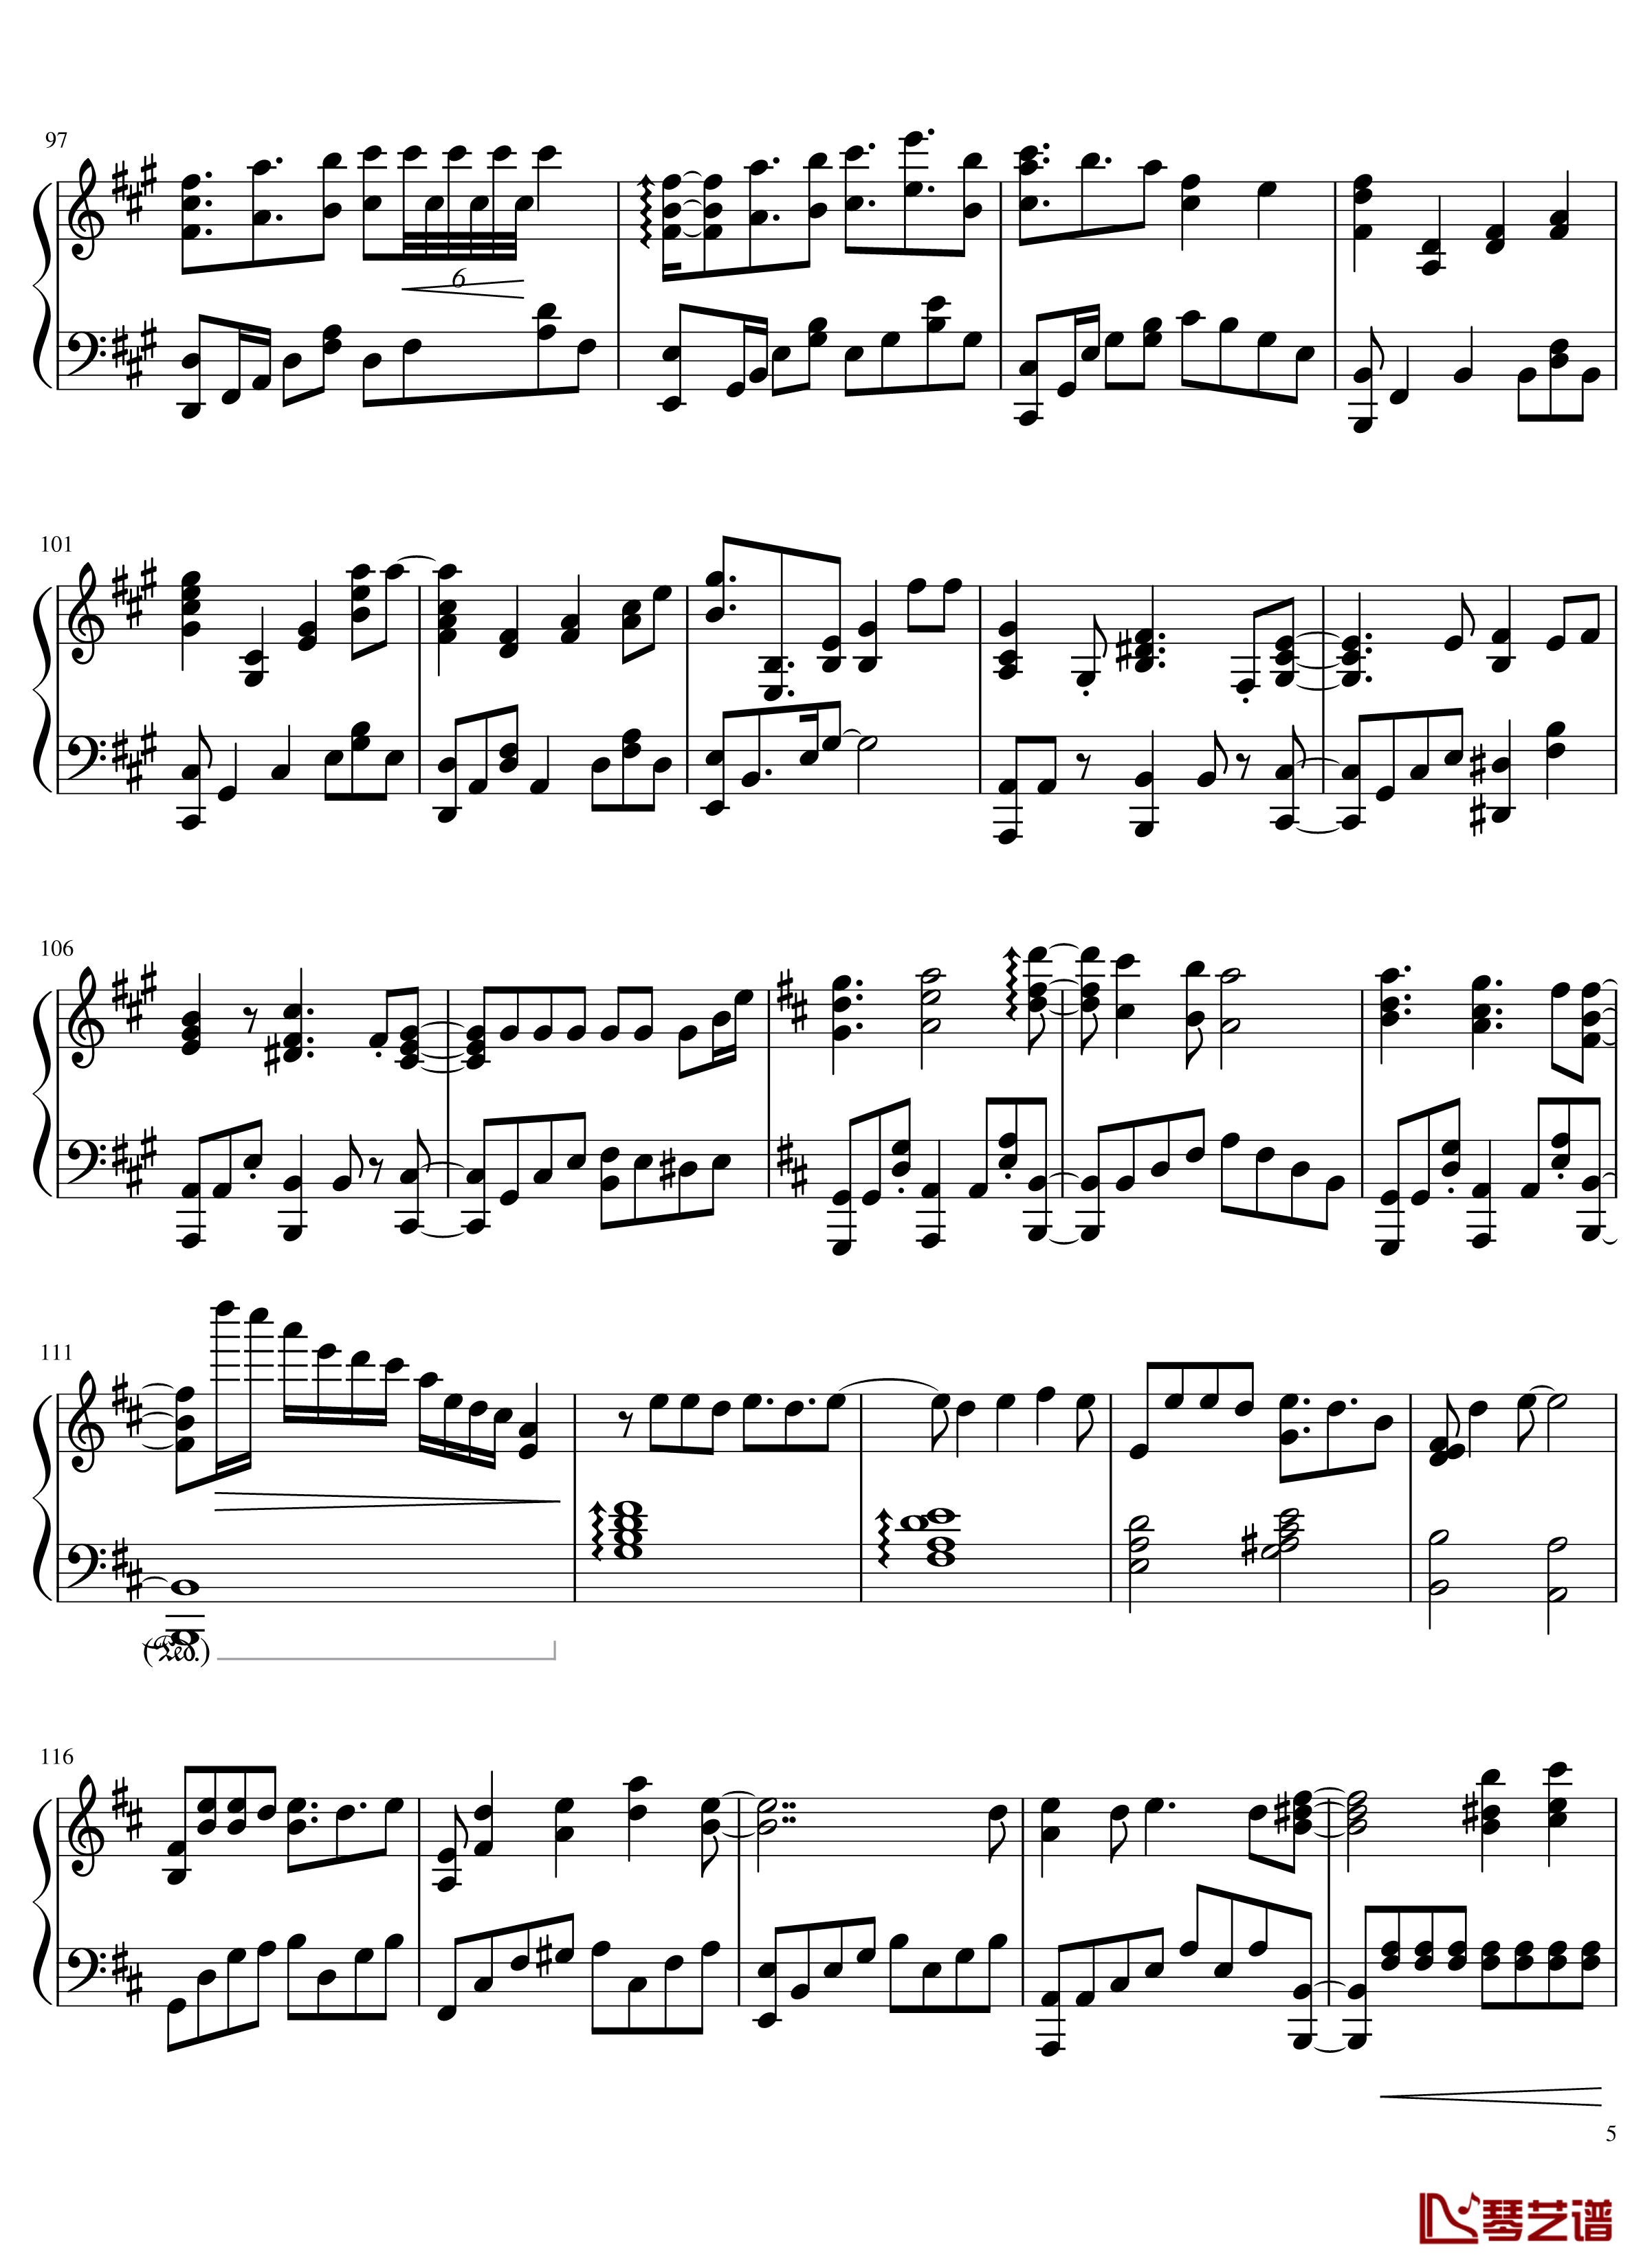 There is a reason钢琴谱-nogamenolife5